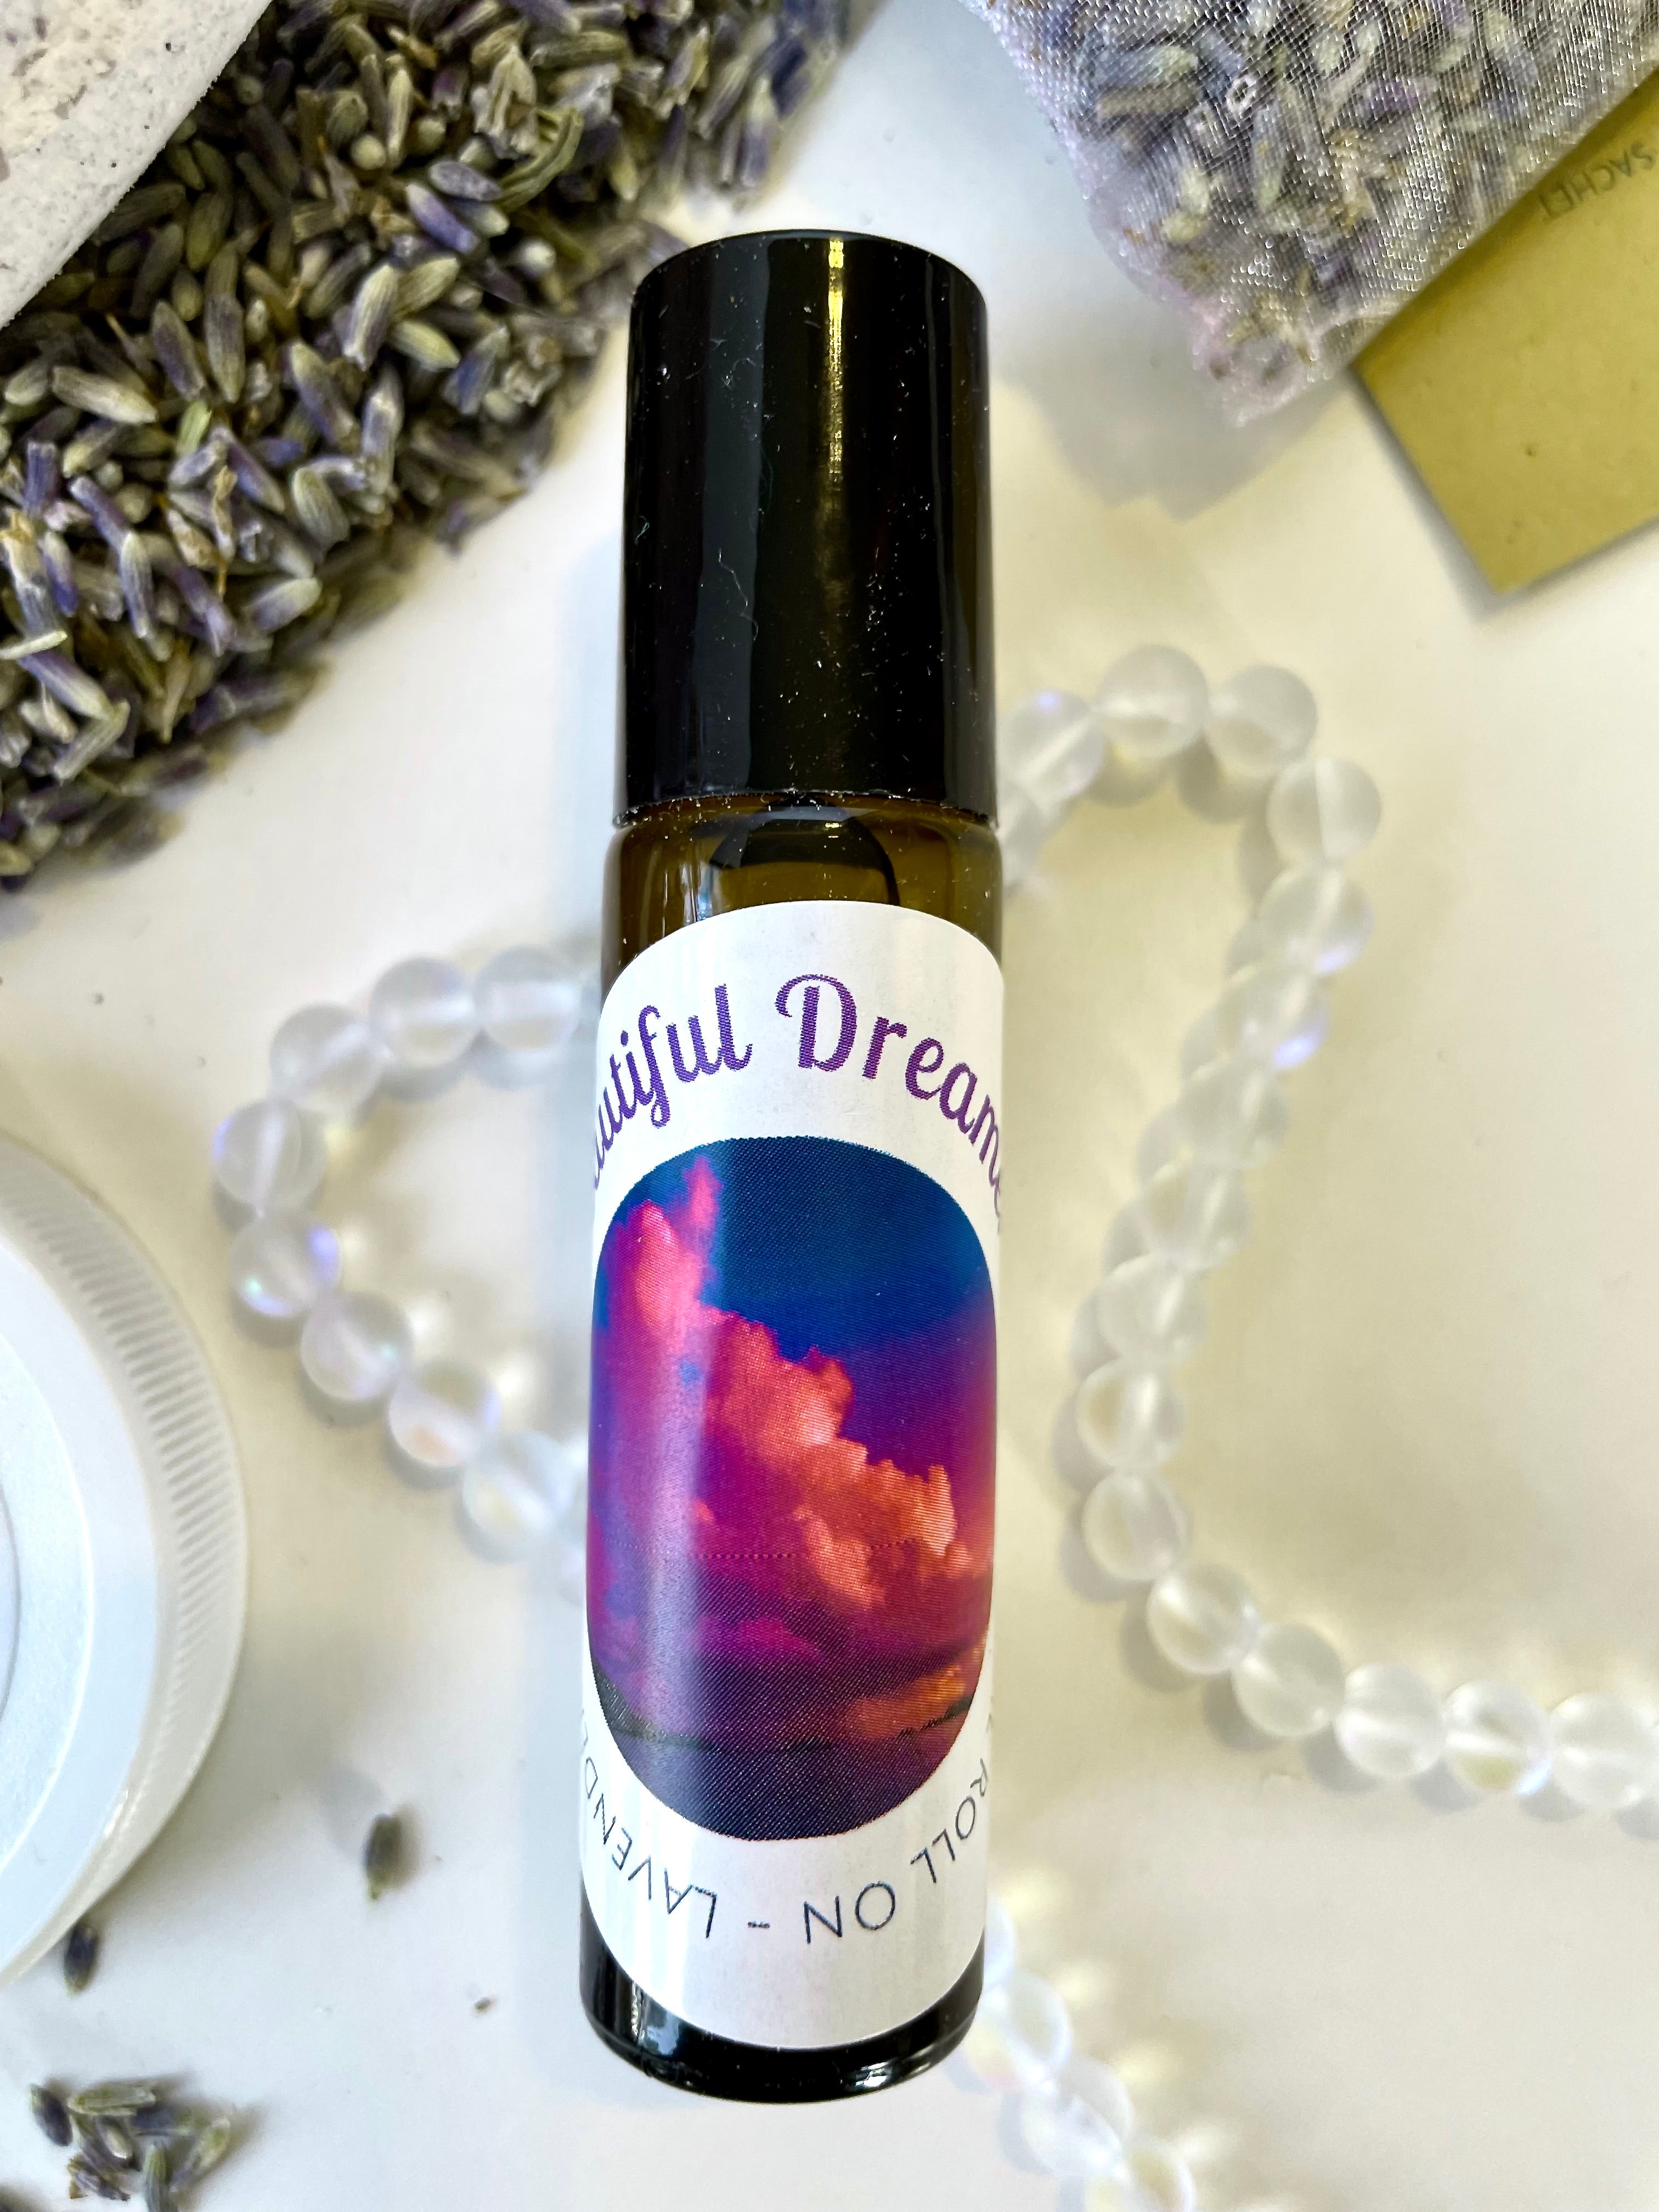 Beautiful Dreamer Sleep Self-Care Kit | Stresscase